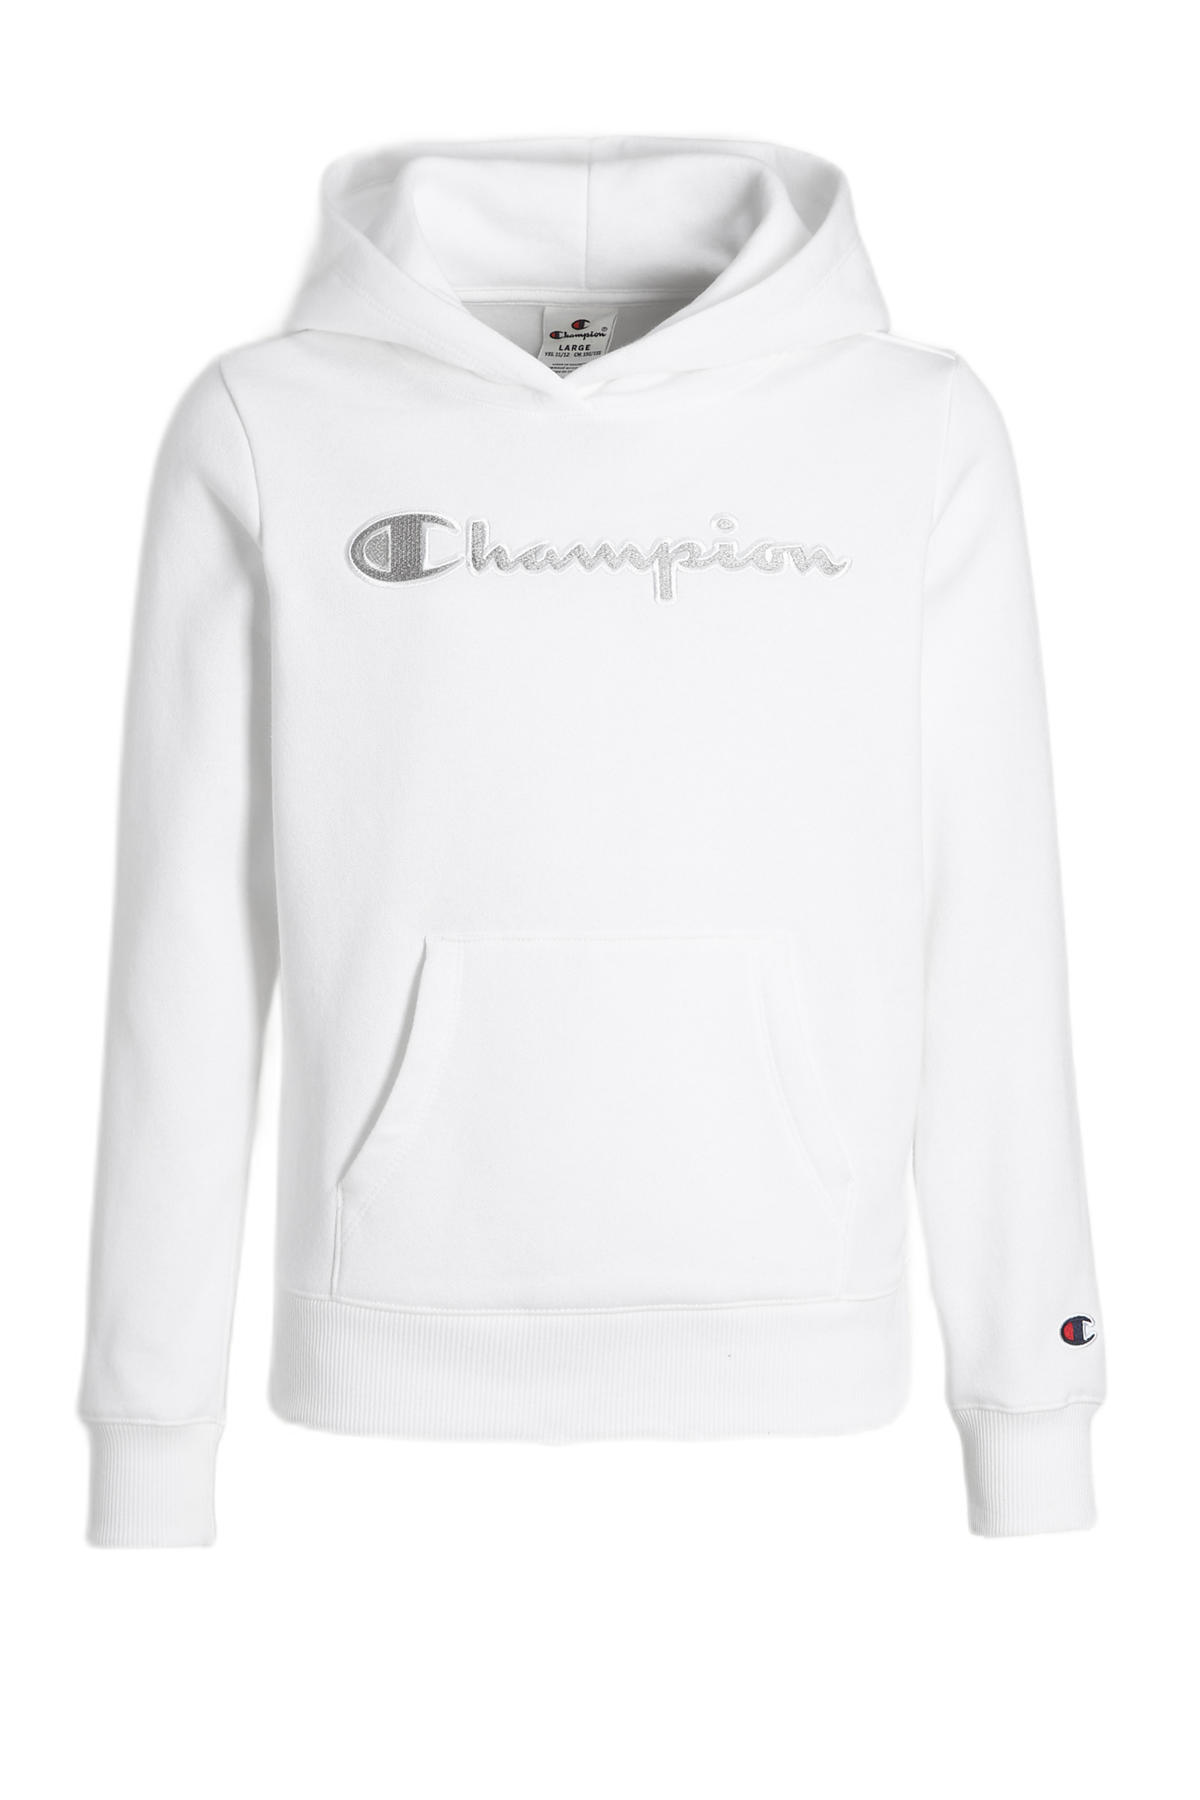 Ga op pad Bandiet Okkernoot Champion hoodie met logo wit | wehkamp